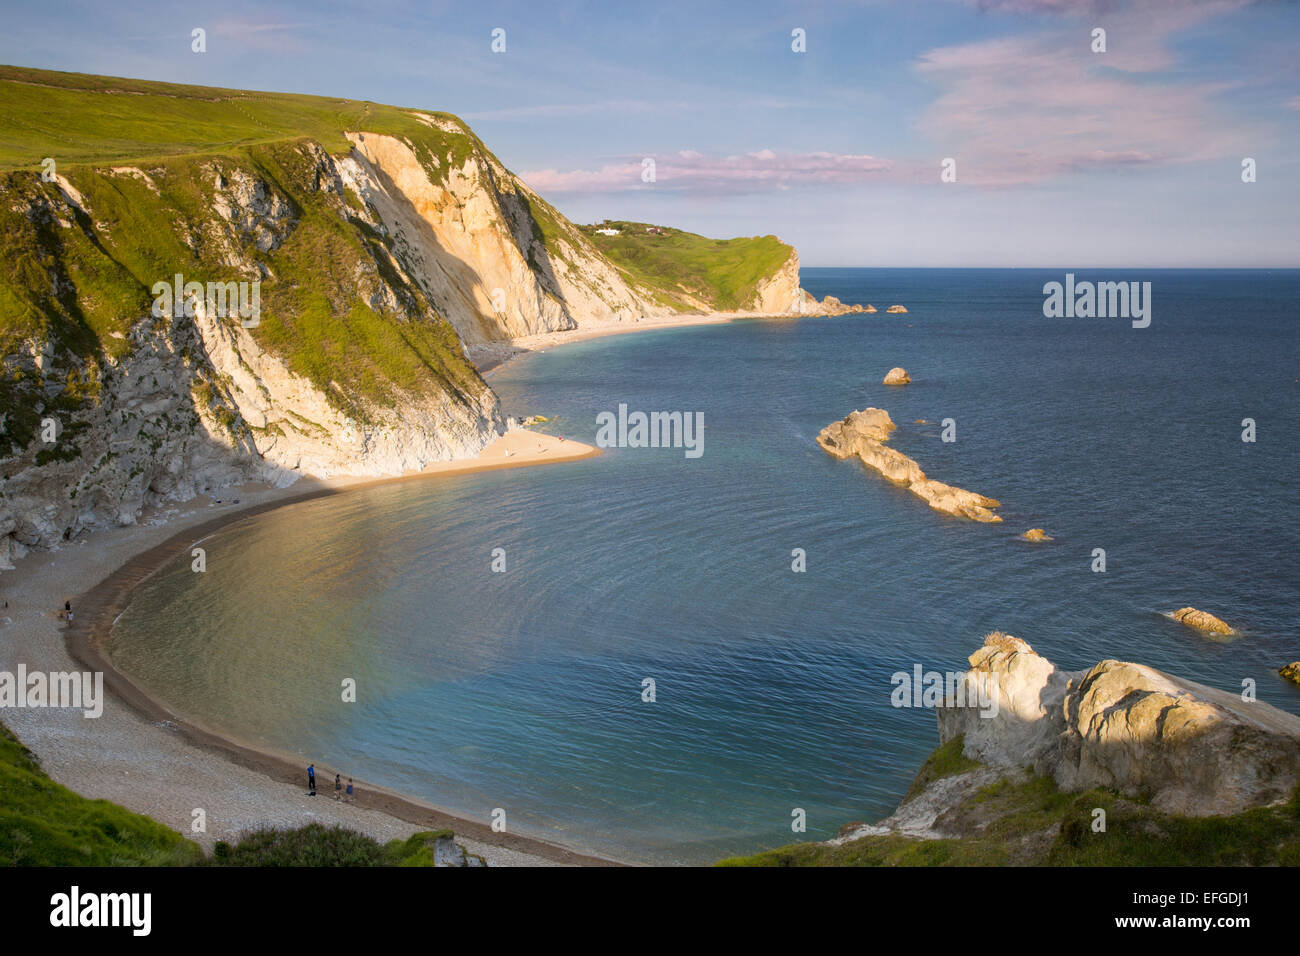 Evening overlooking Man O War Bay along the Jurassic Coast, Dorset, England Stock Photo